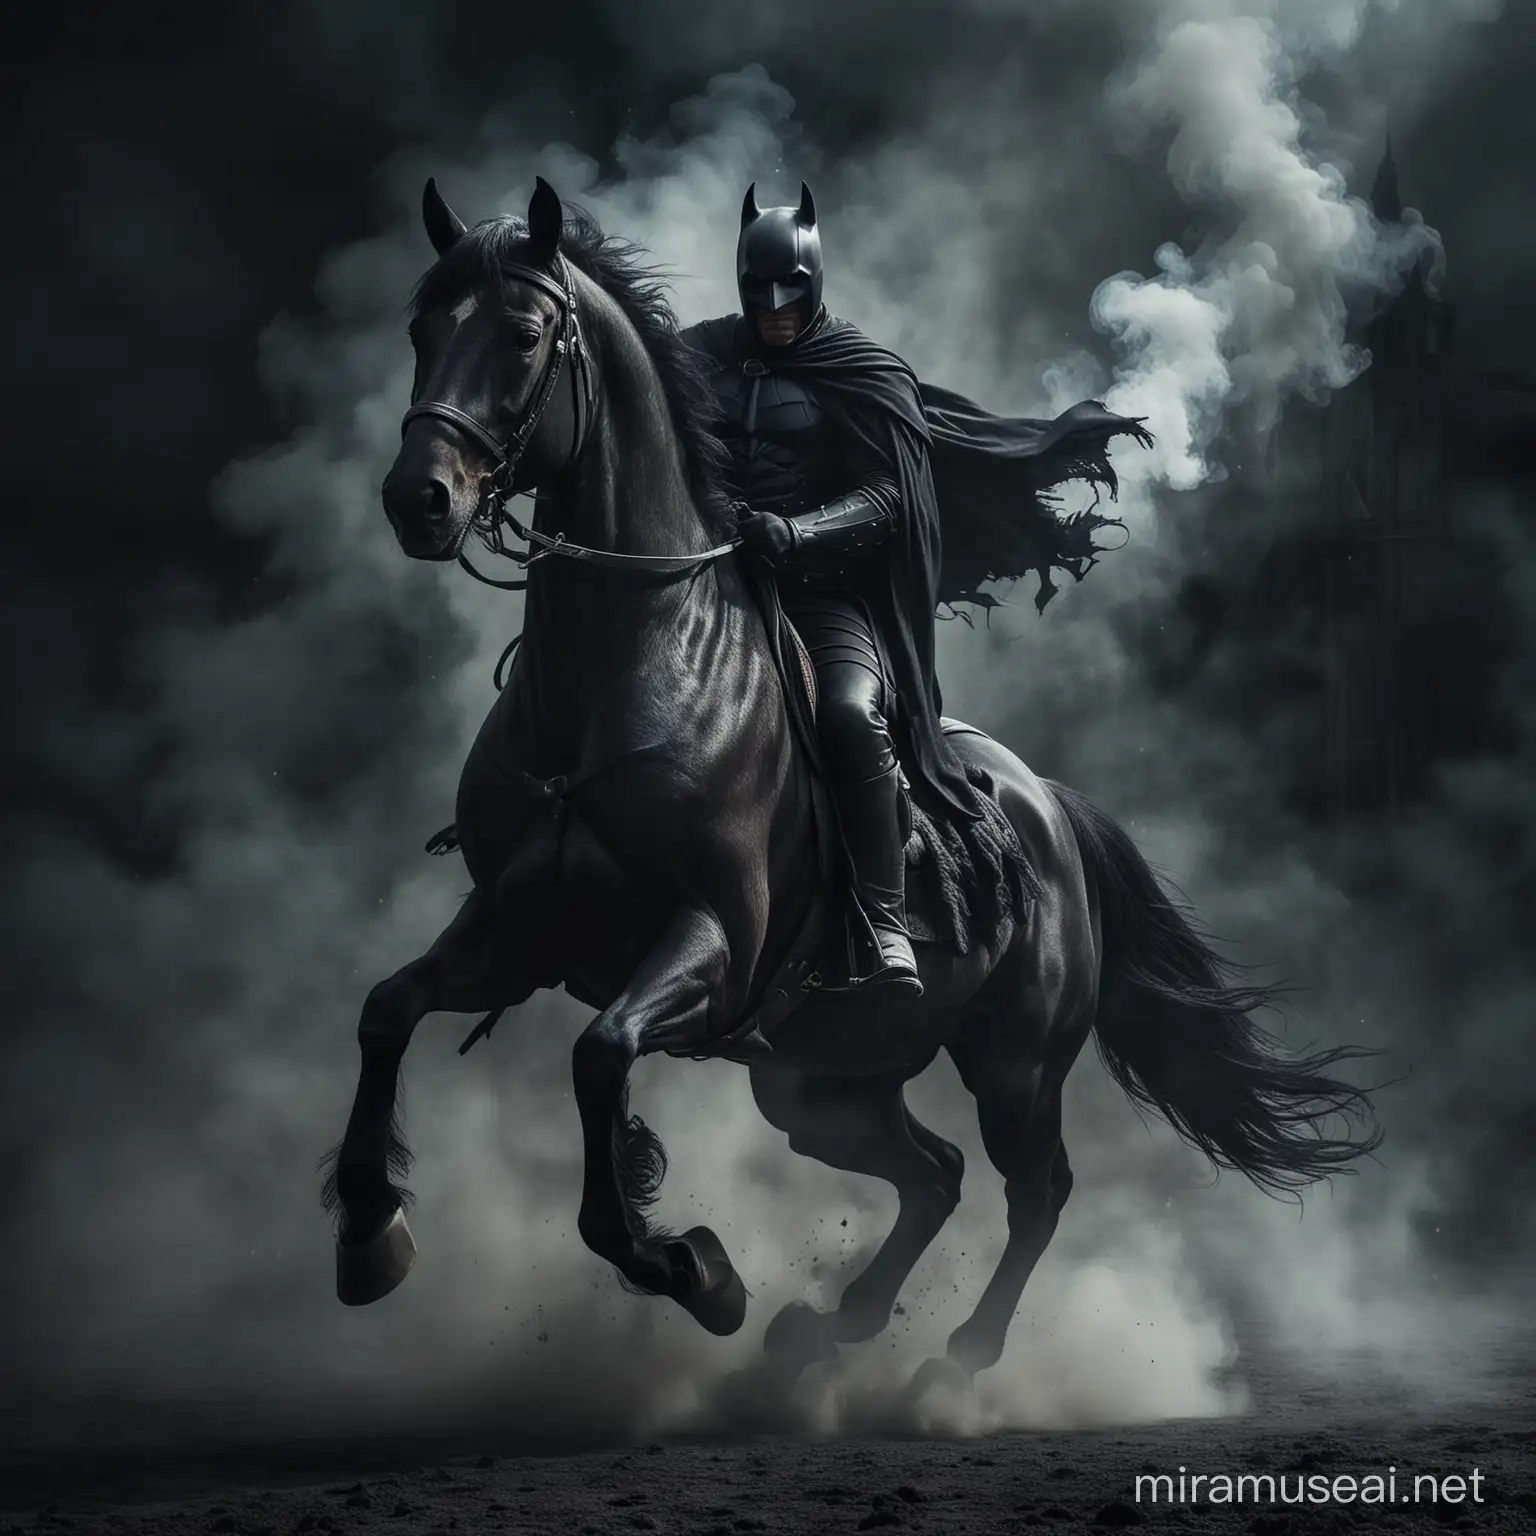 A dark knight, on a black horse, evil, smoke, dramatic background 